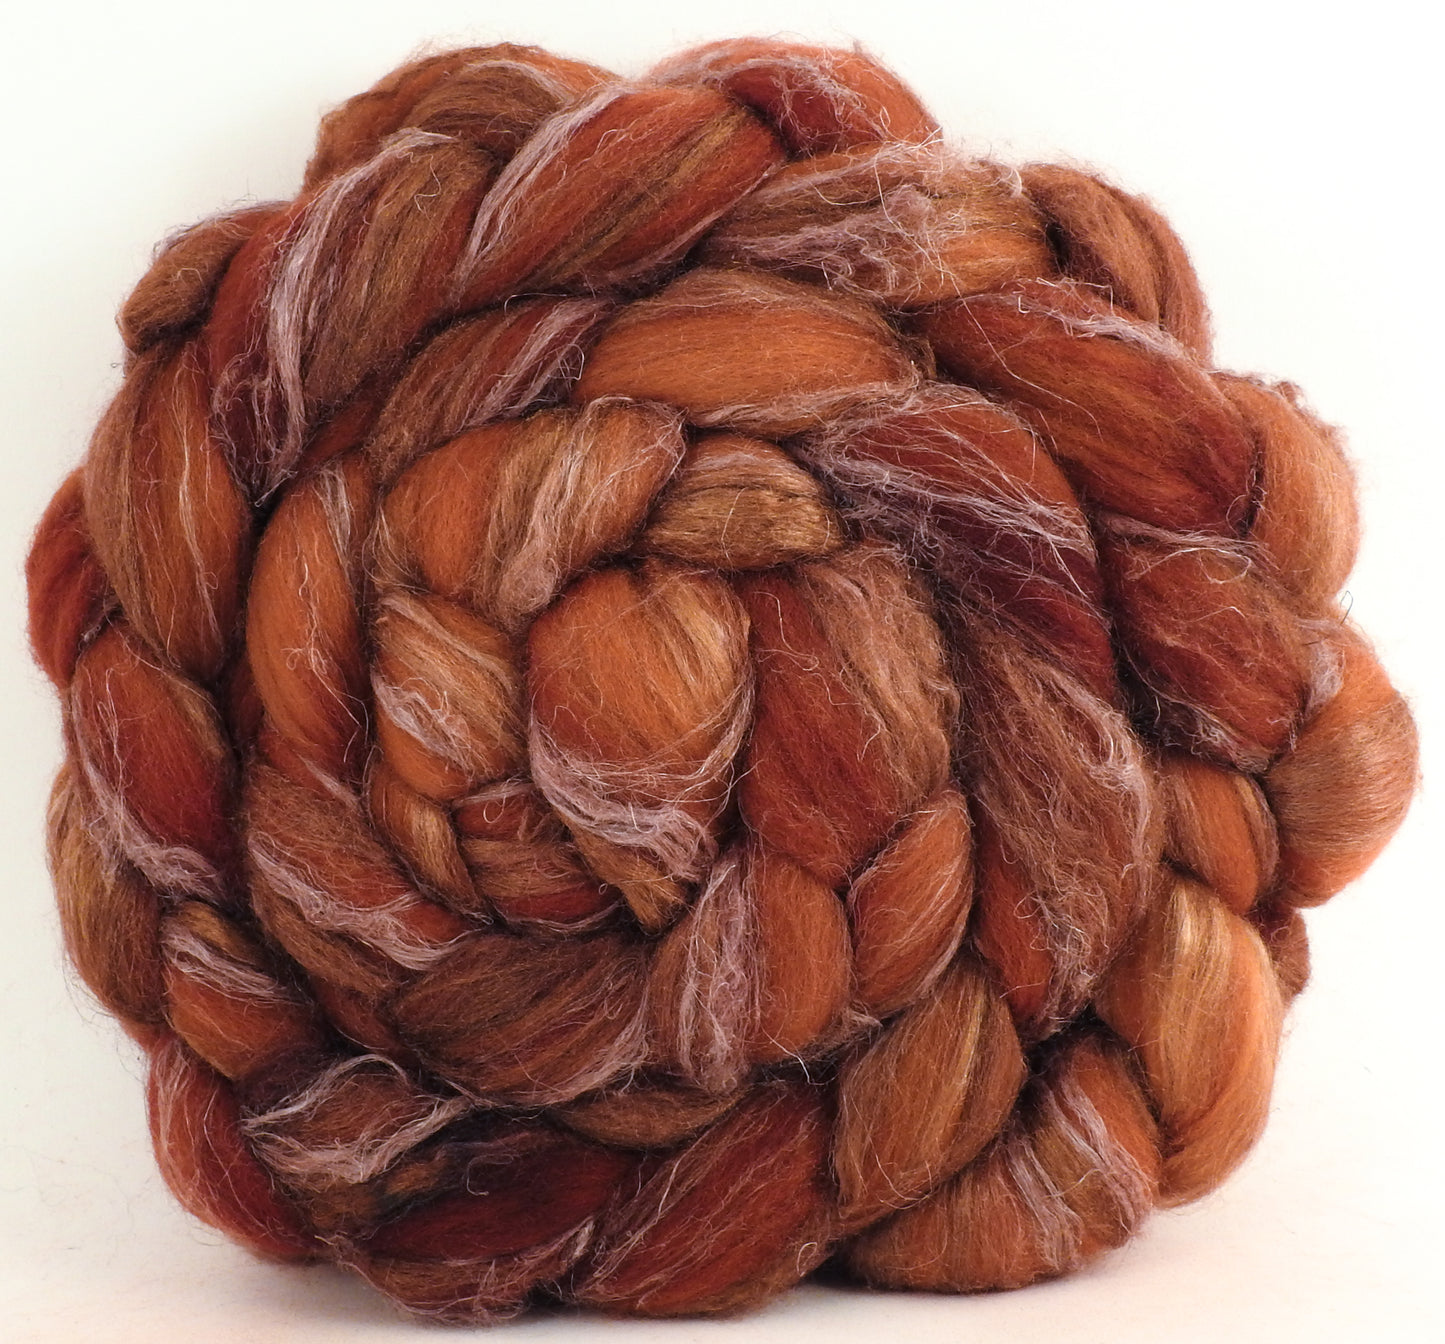 Russet (6 oz) - Merino/ Tussah Silk/ Natural Flax (50/25/25)